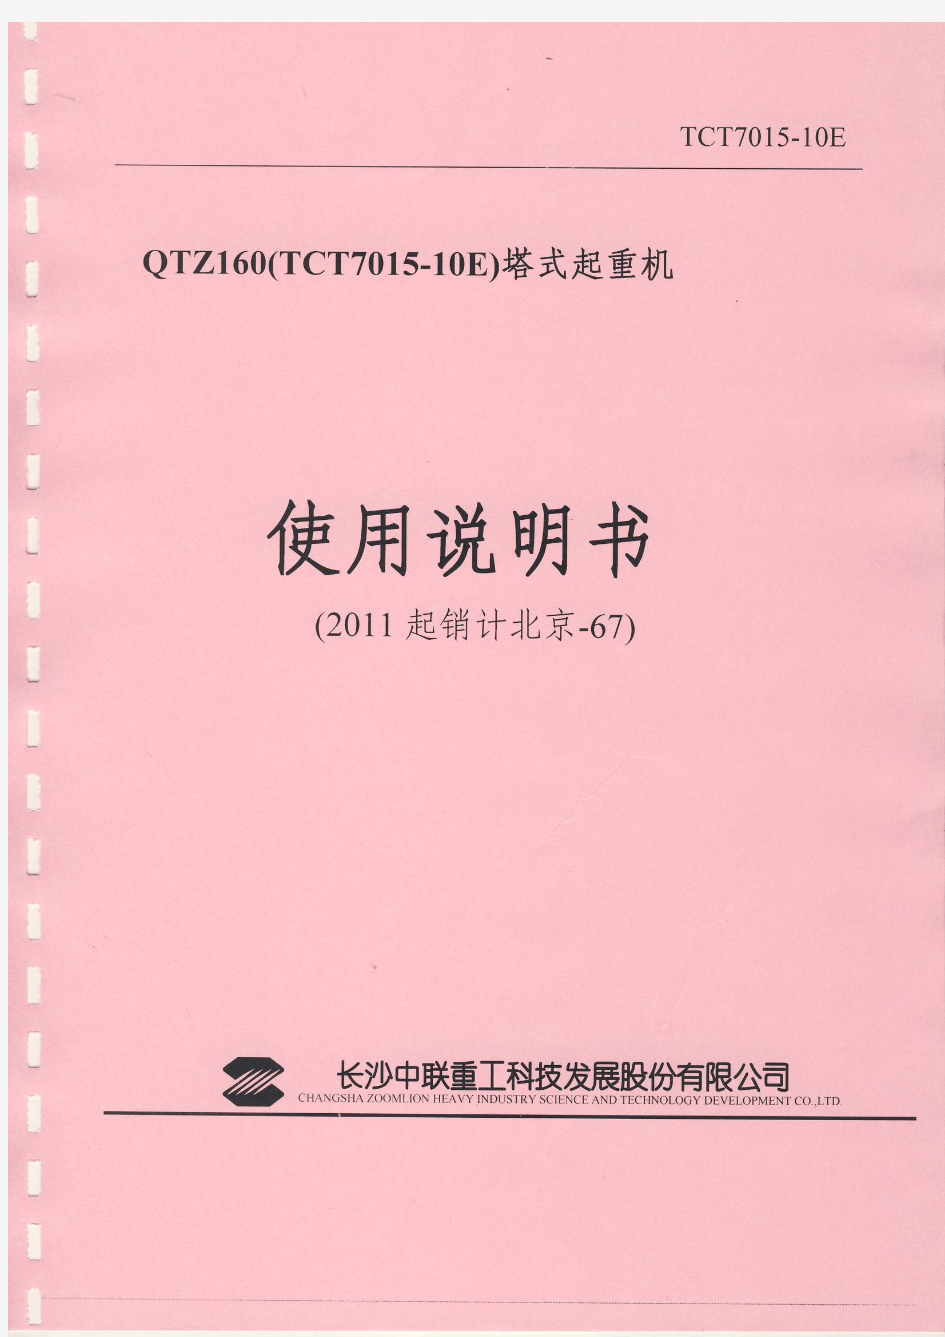 TCT7015-10E使用说明书(长沙中联重科)